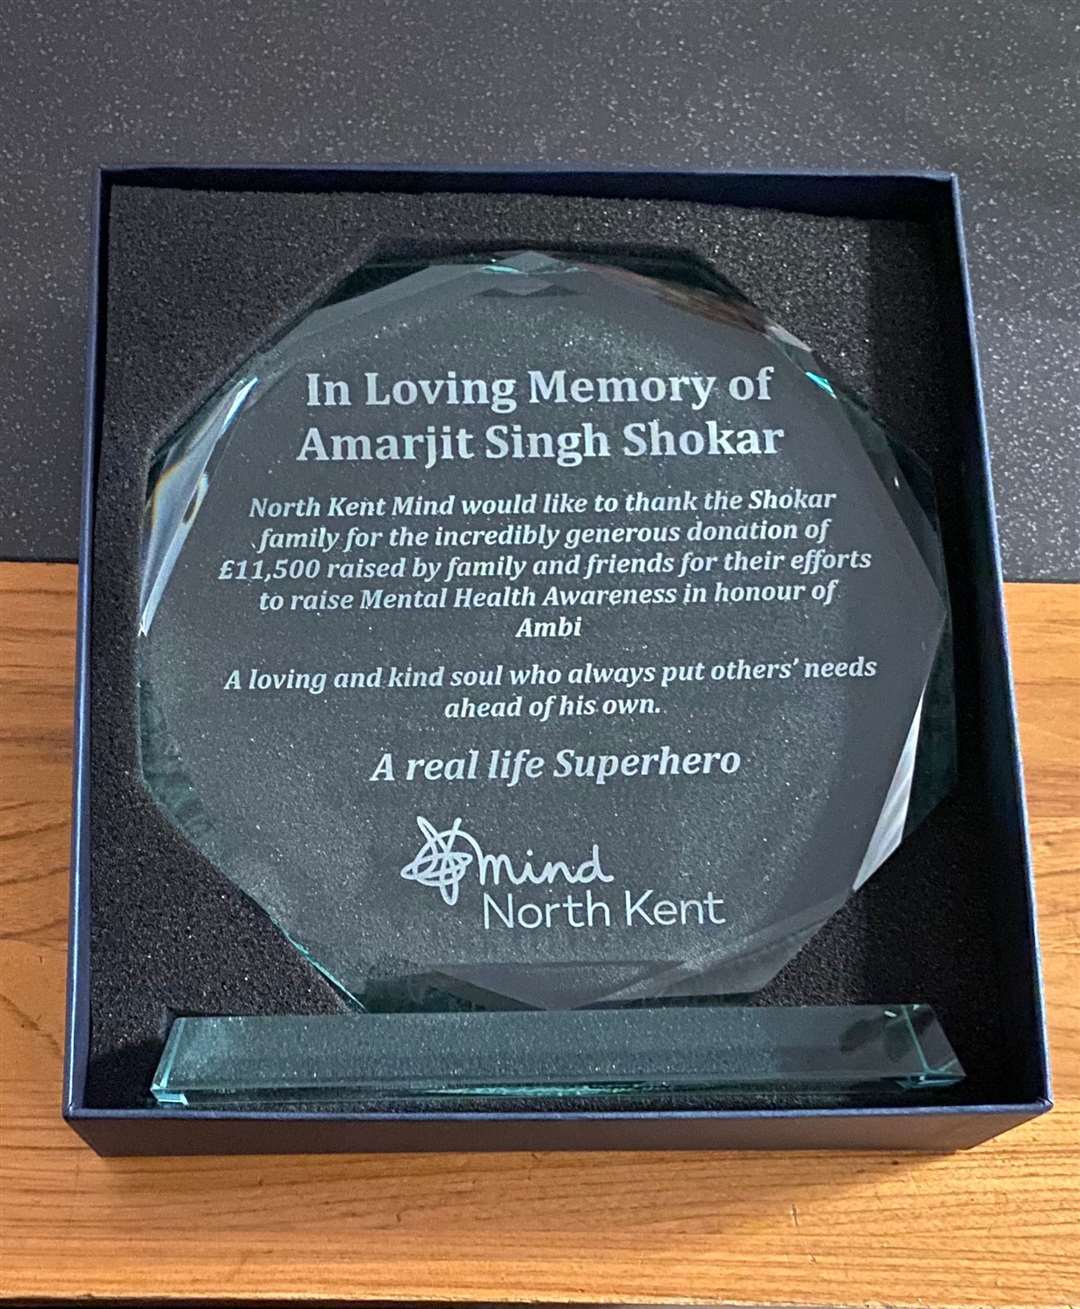 The plaque from MIND commemorating Amarjit Singh Shokar